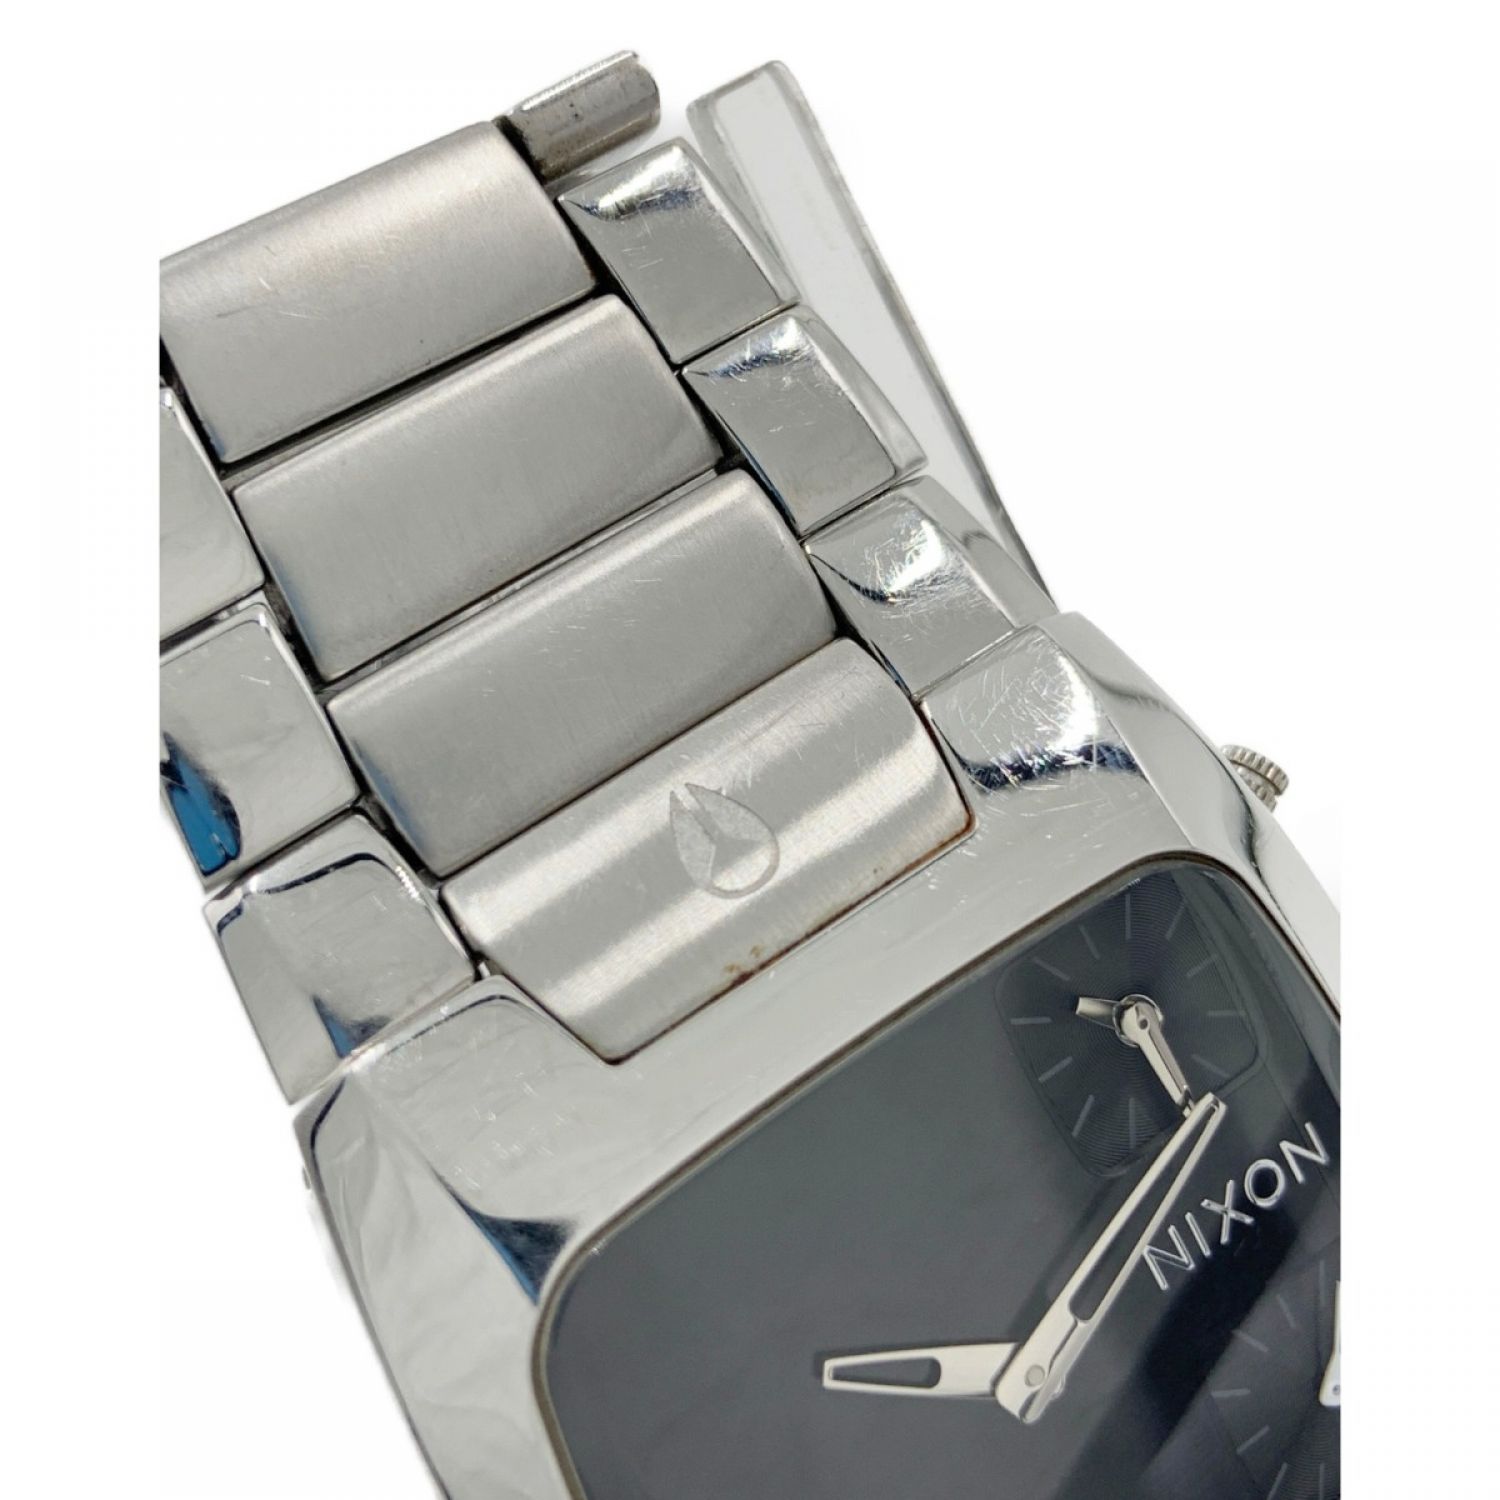 nixon THE BANKS メンズ腕時計 - 腕時計(アナログ)